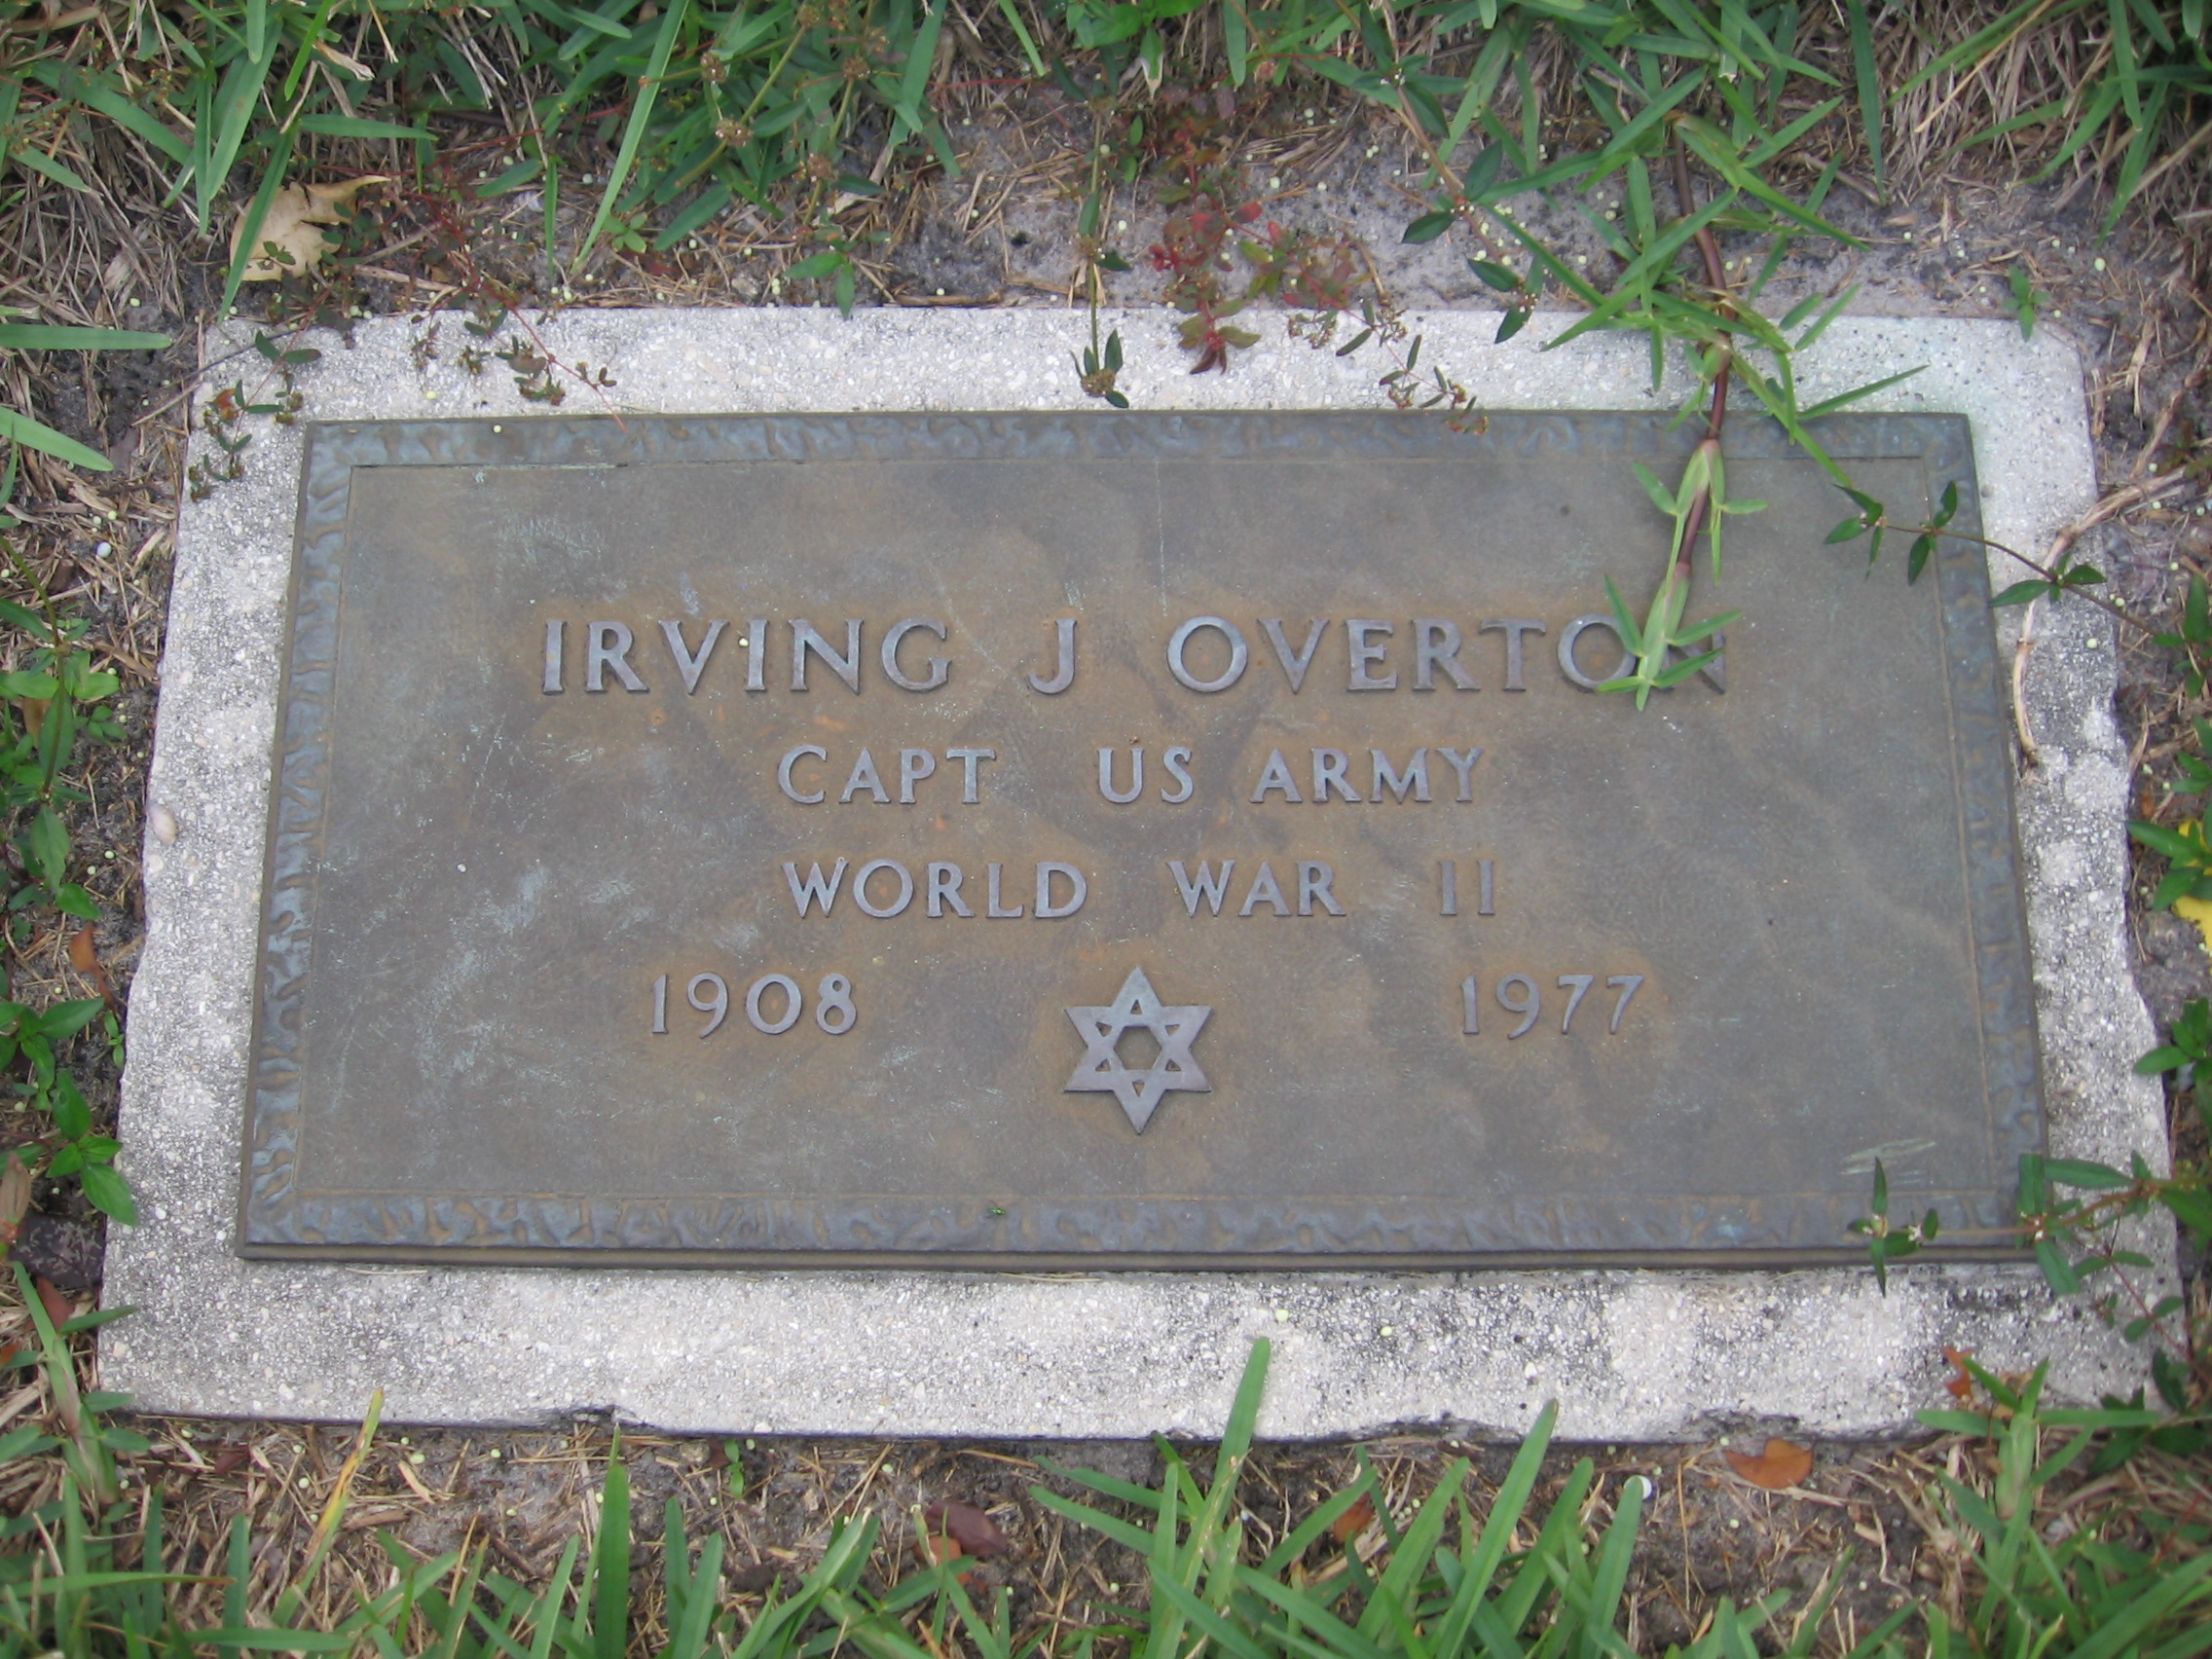 Capt Irving J Overton